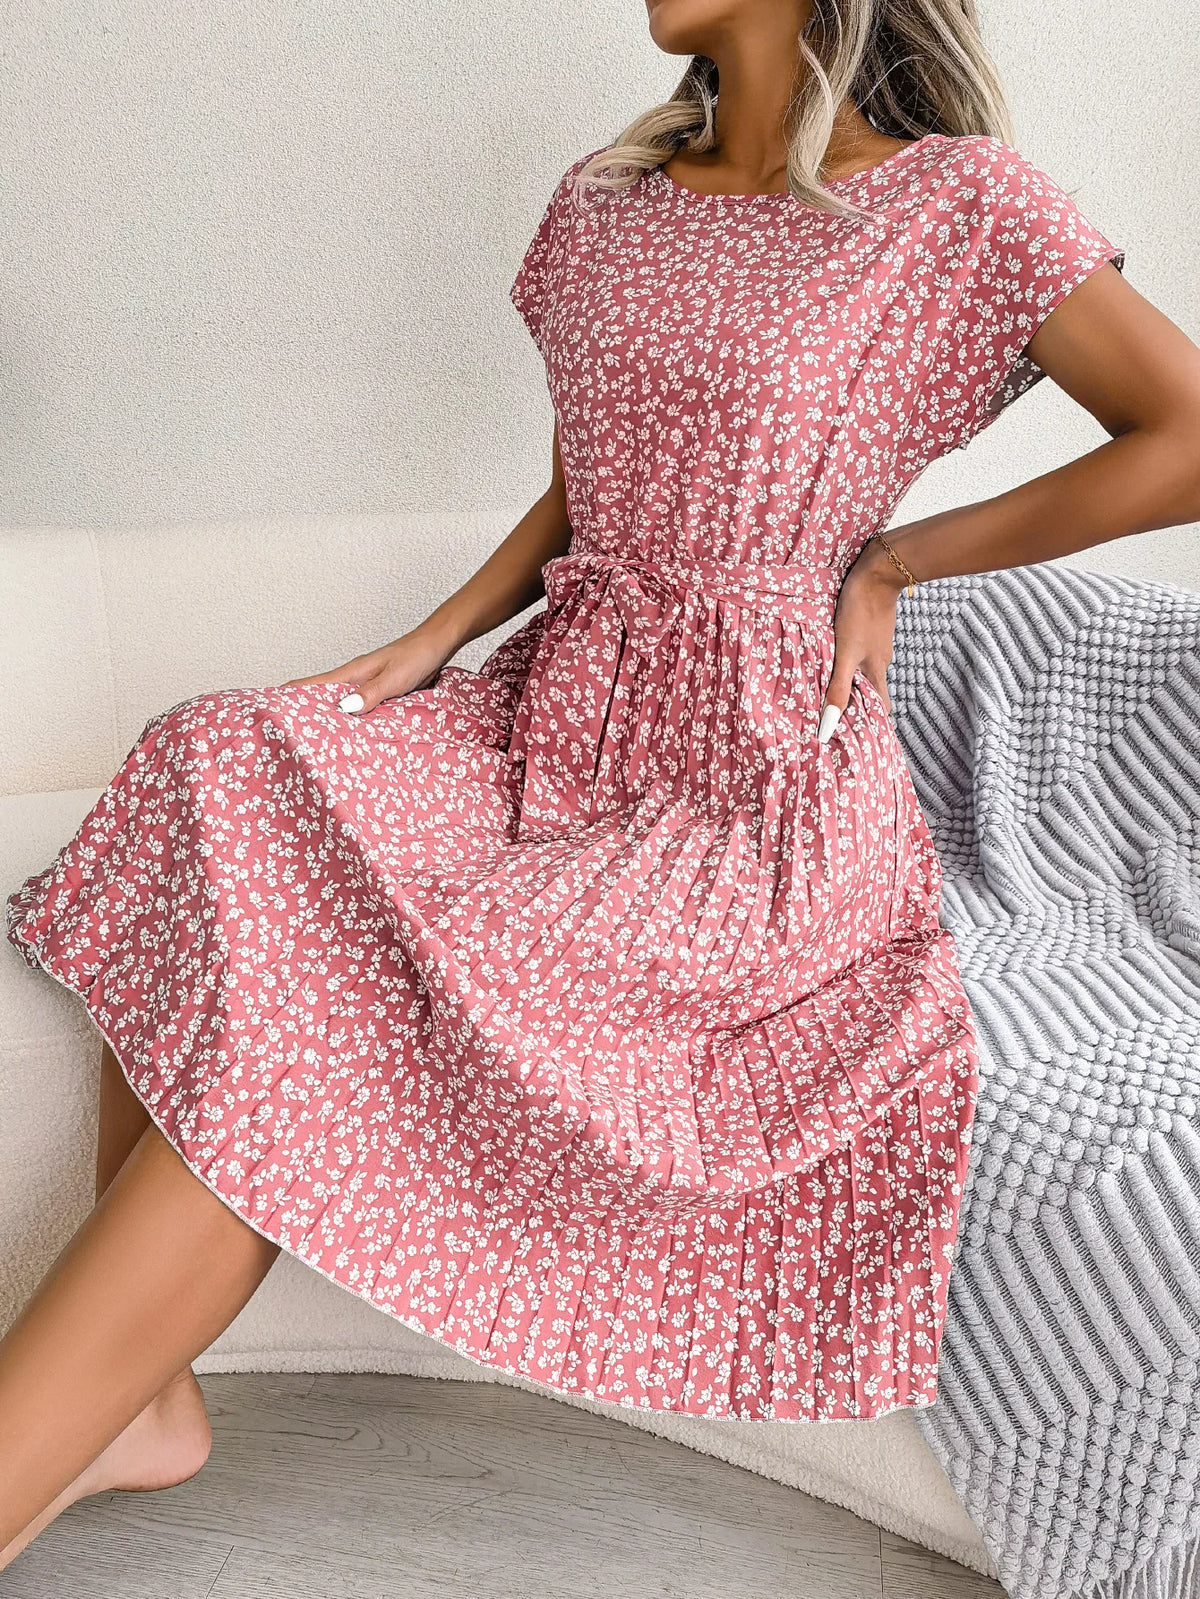 Pink Spring/Summer Floral Pleated A-Line Dress with Short Sleeves - Effortlessly Elegant